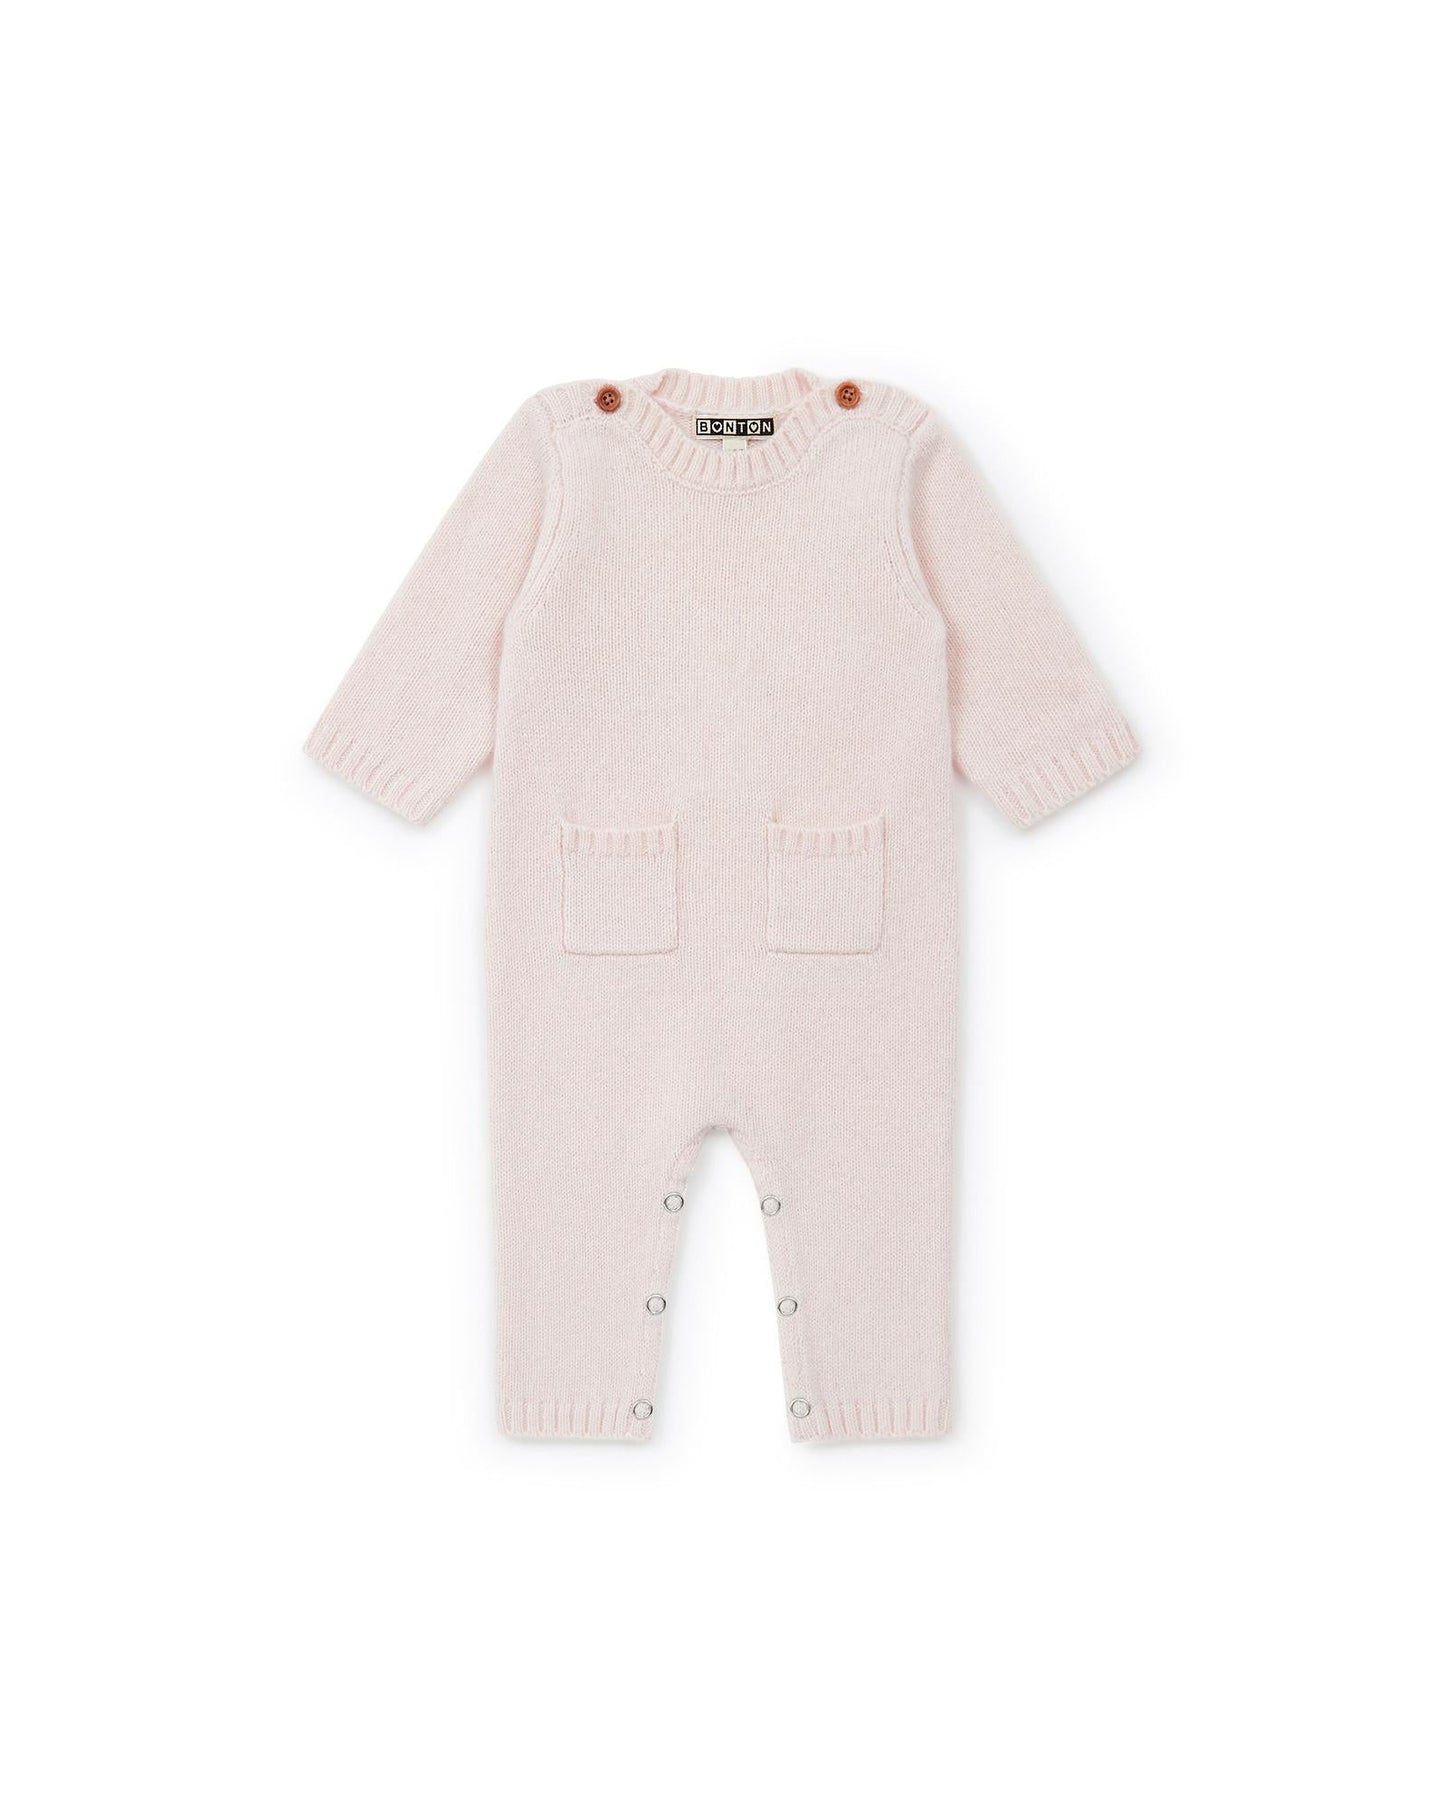 Jumpsuit of Newborn Pink Baby in Wool